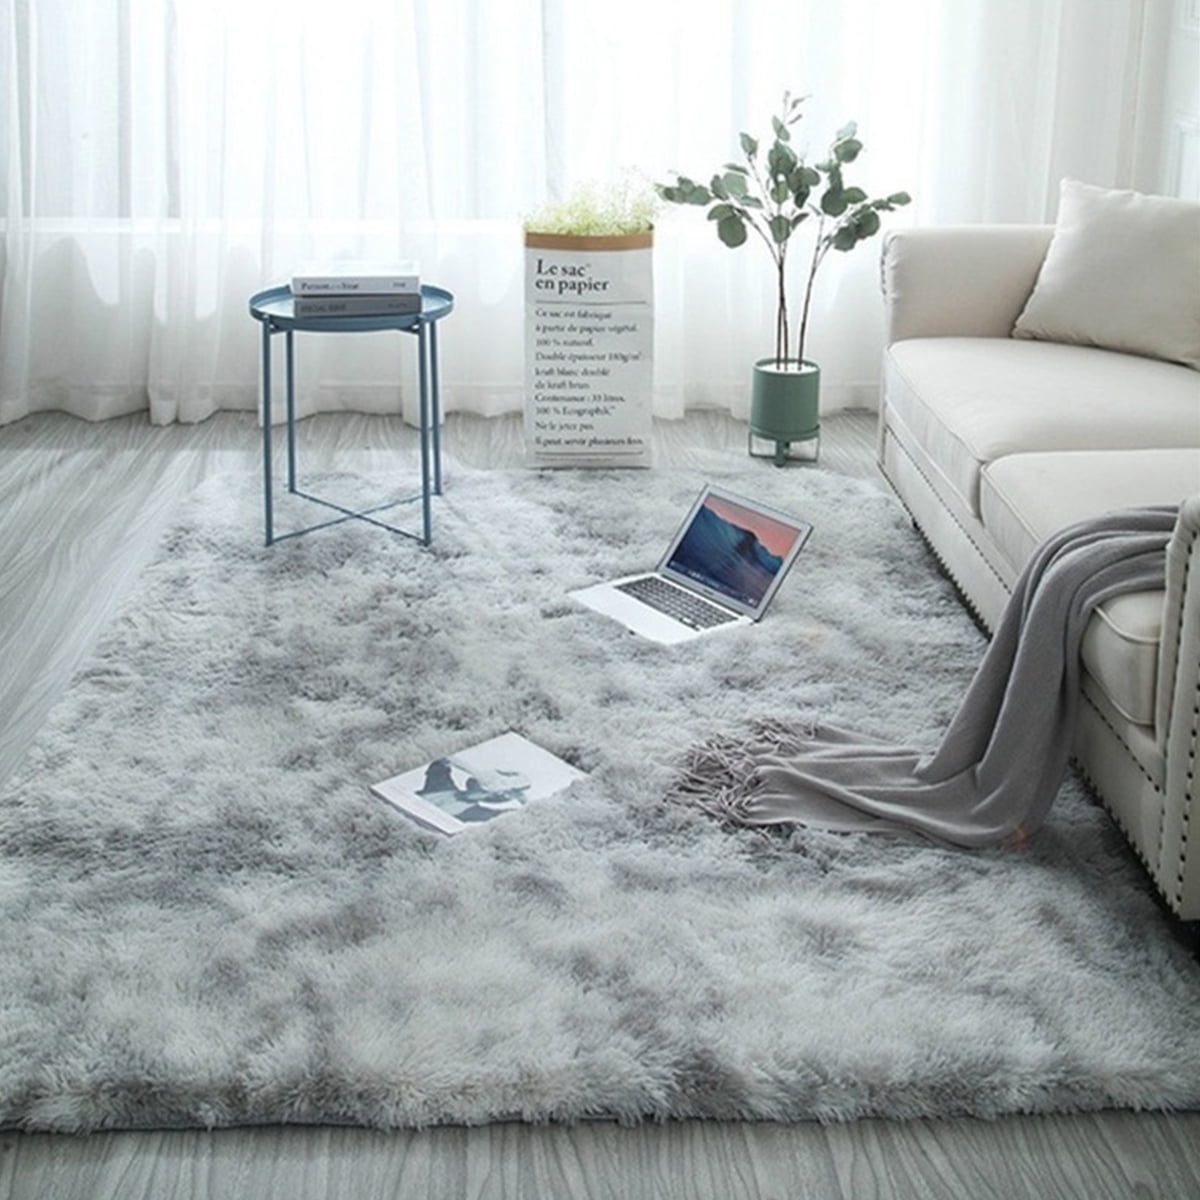 White Fluffy Faux Fur Area Rug Hairy Shaggy Anti-Skid Carpet Soft Home Floor Mat 